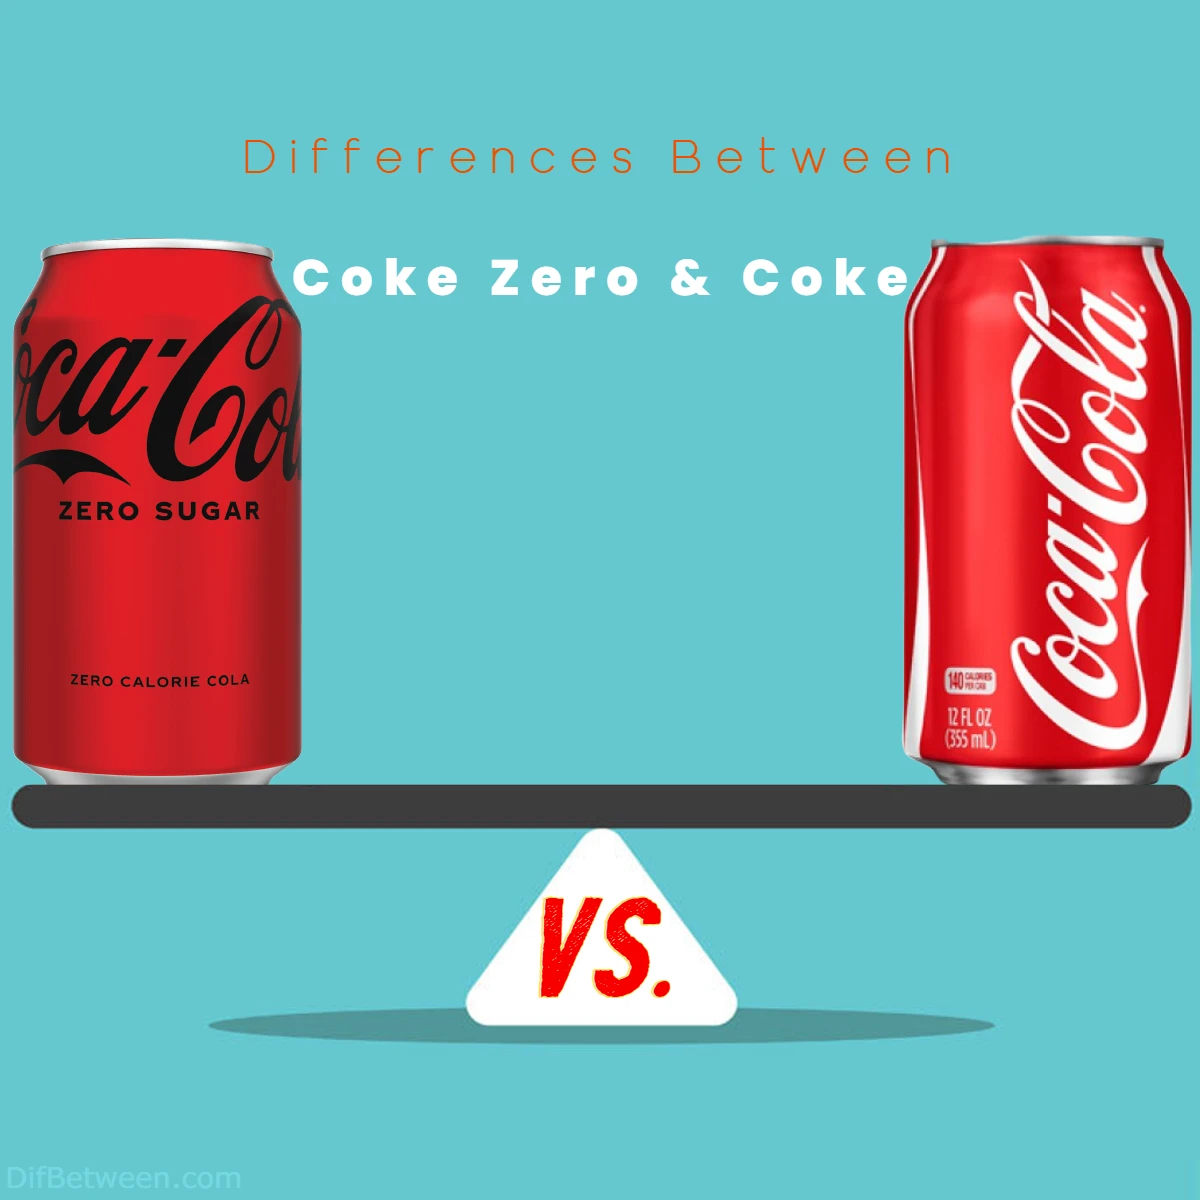 Differences Between Coke and Coke Zero